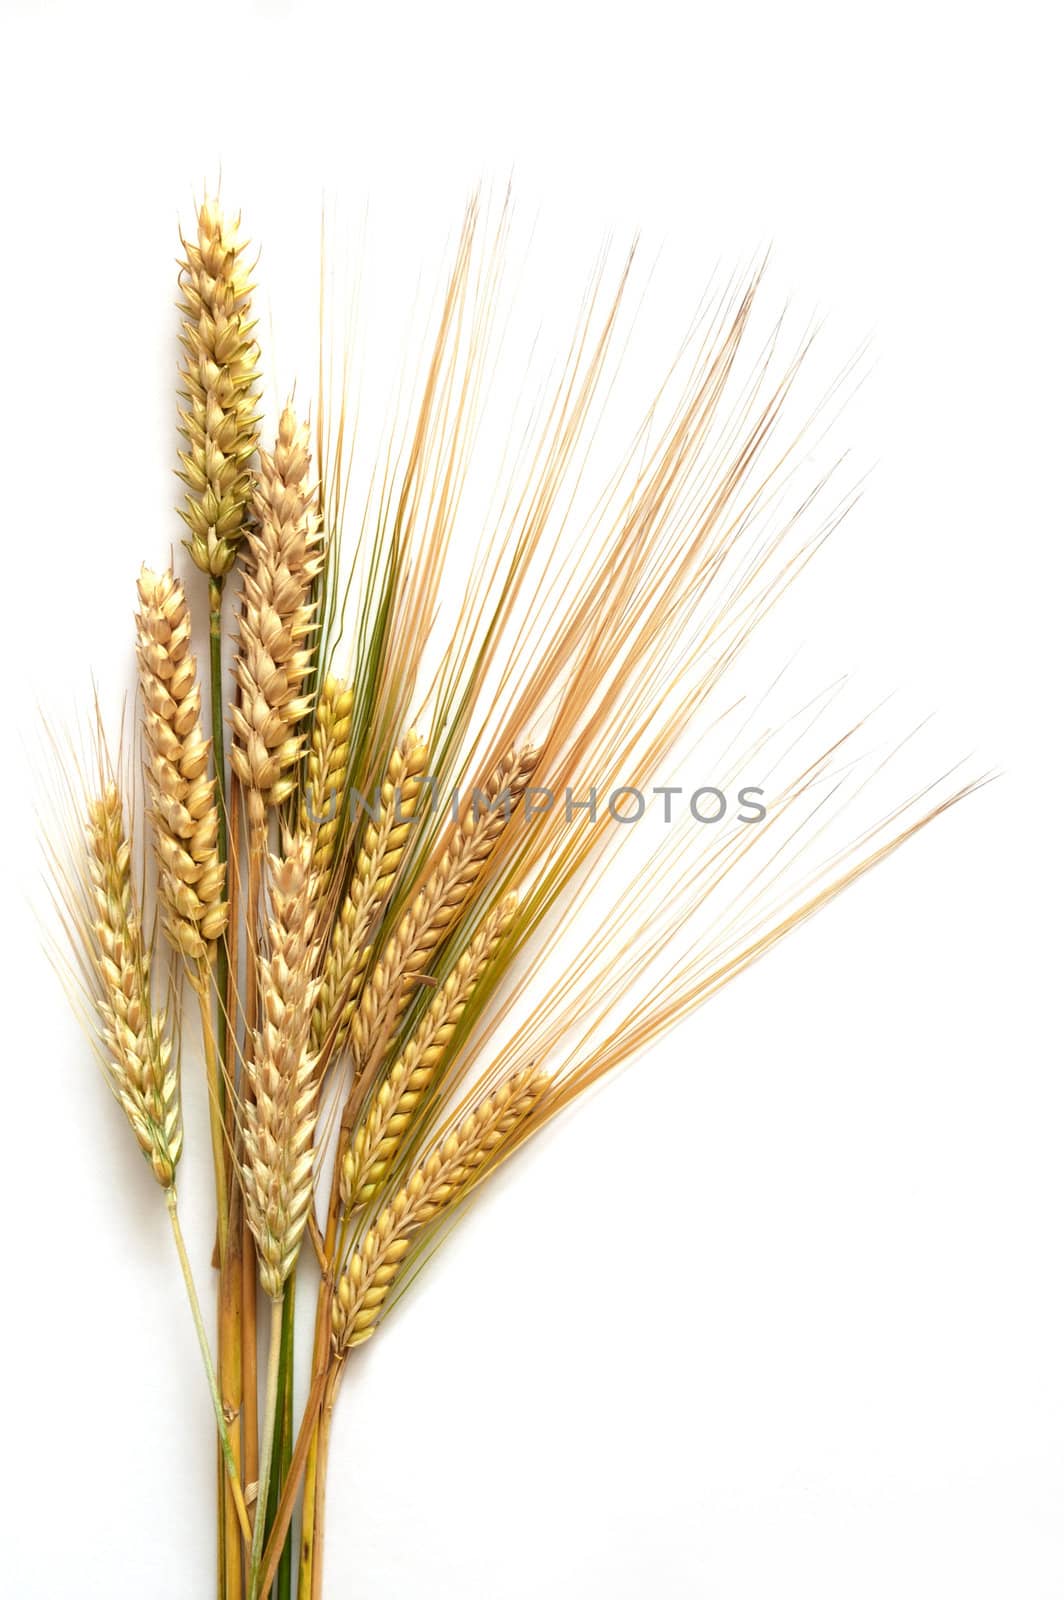 Wheat by tornellistefano